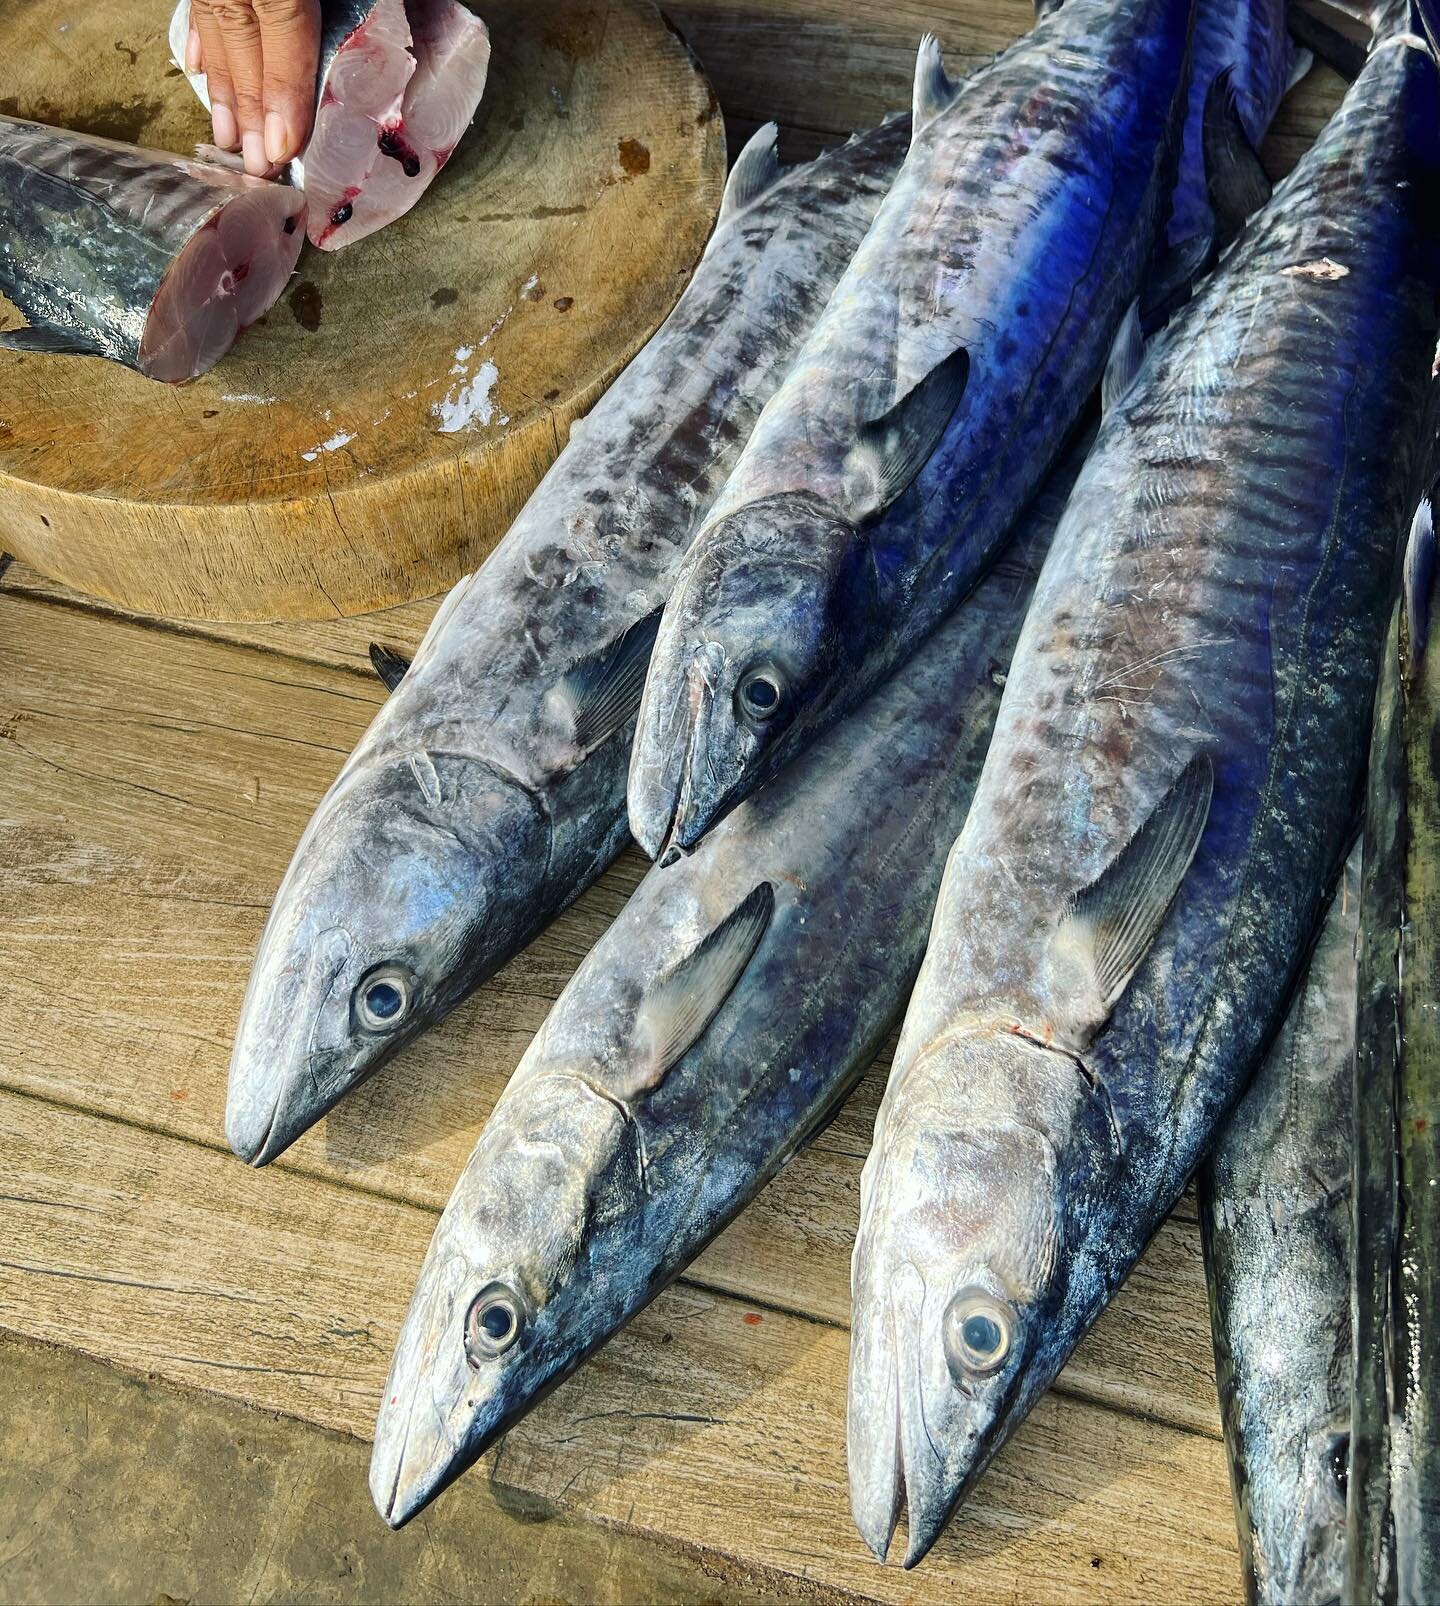 Holy Mackerel! The fish were fresh (and delicious) on Koh Tao (a small island in Thailand).
.
.

#kohtao #thailand #foodstagram #eatingfortheinsta #fish #streetfood #mackerel #freshfish